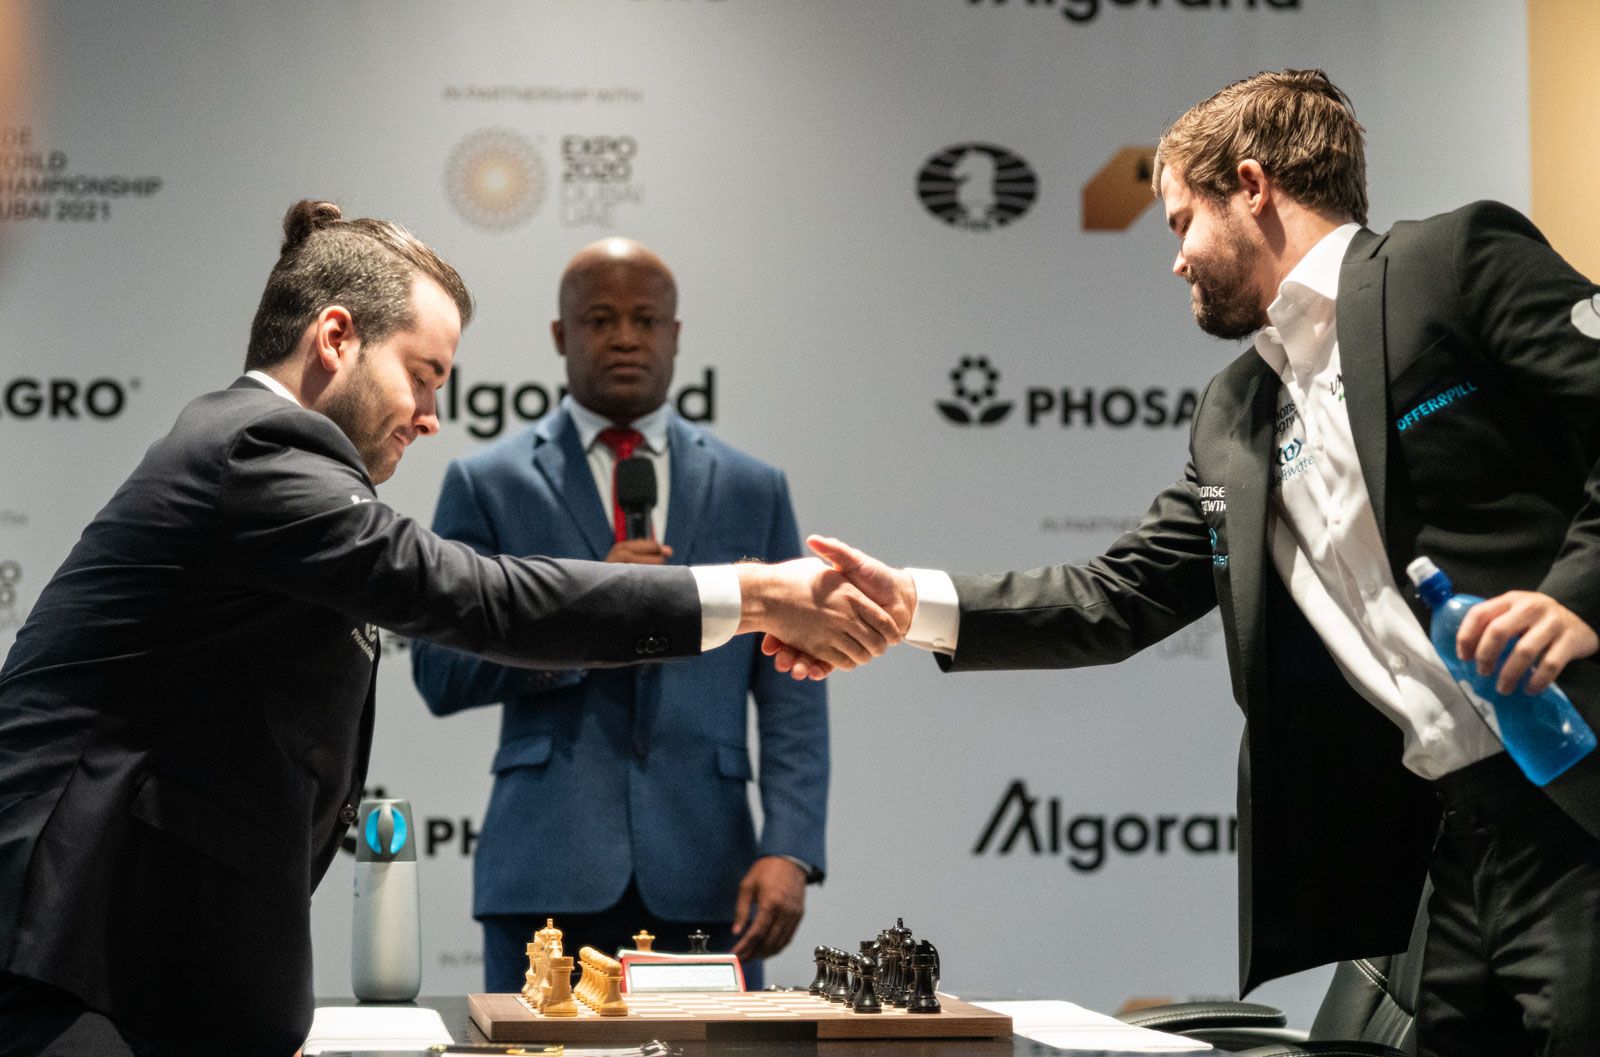 Magnus Carlsen wins 5th world chess title – DW – 12/10/2021